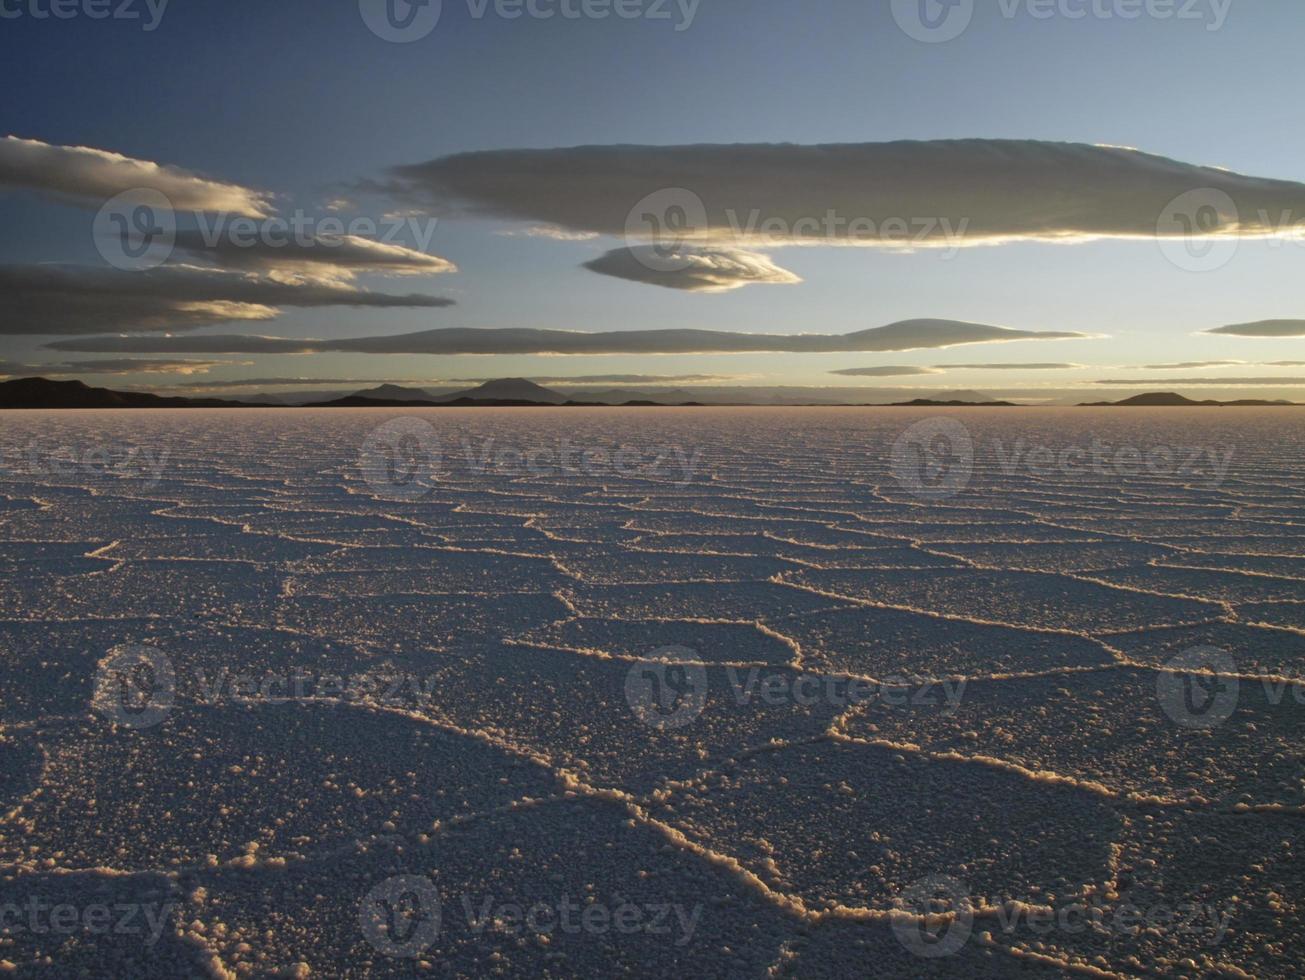 Gorgeous patterns on the surface of the salt flats of Salar de Uyuni, Bolivia, during sunset photo